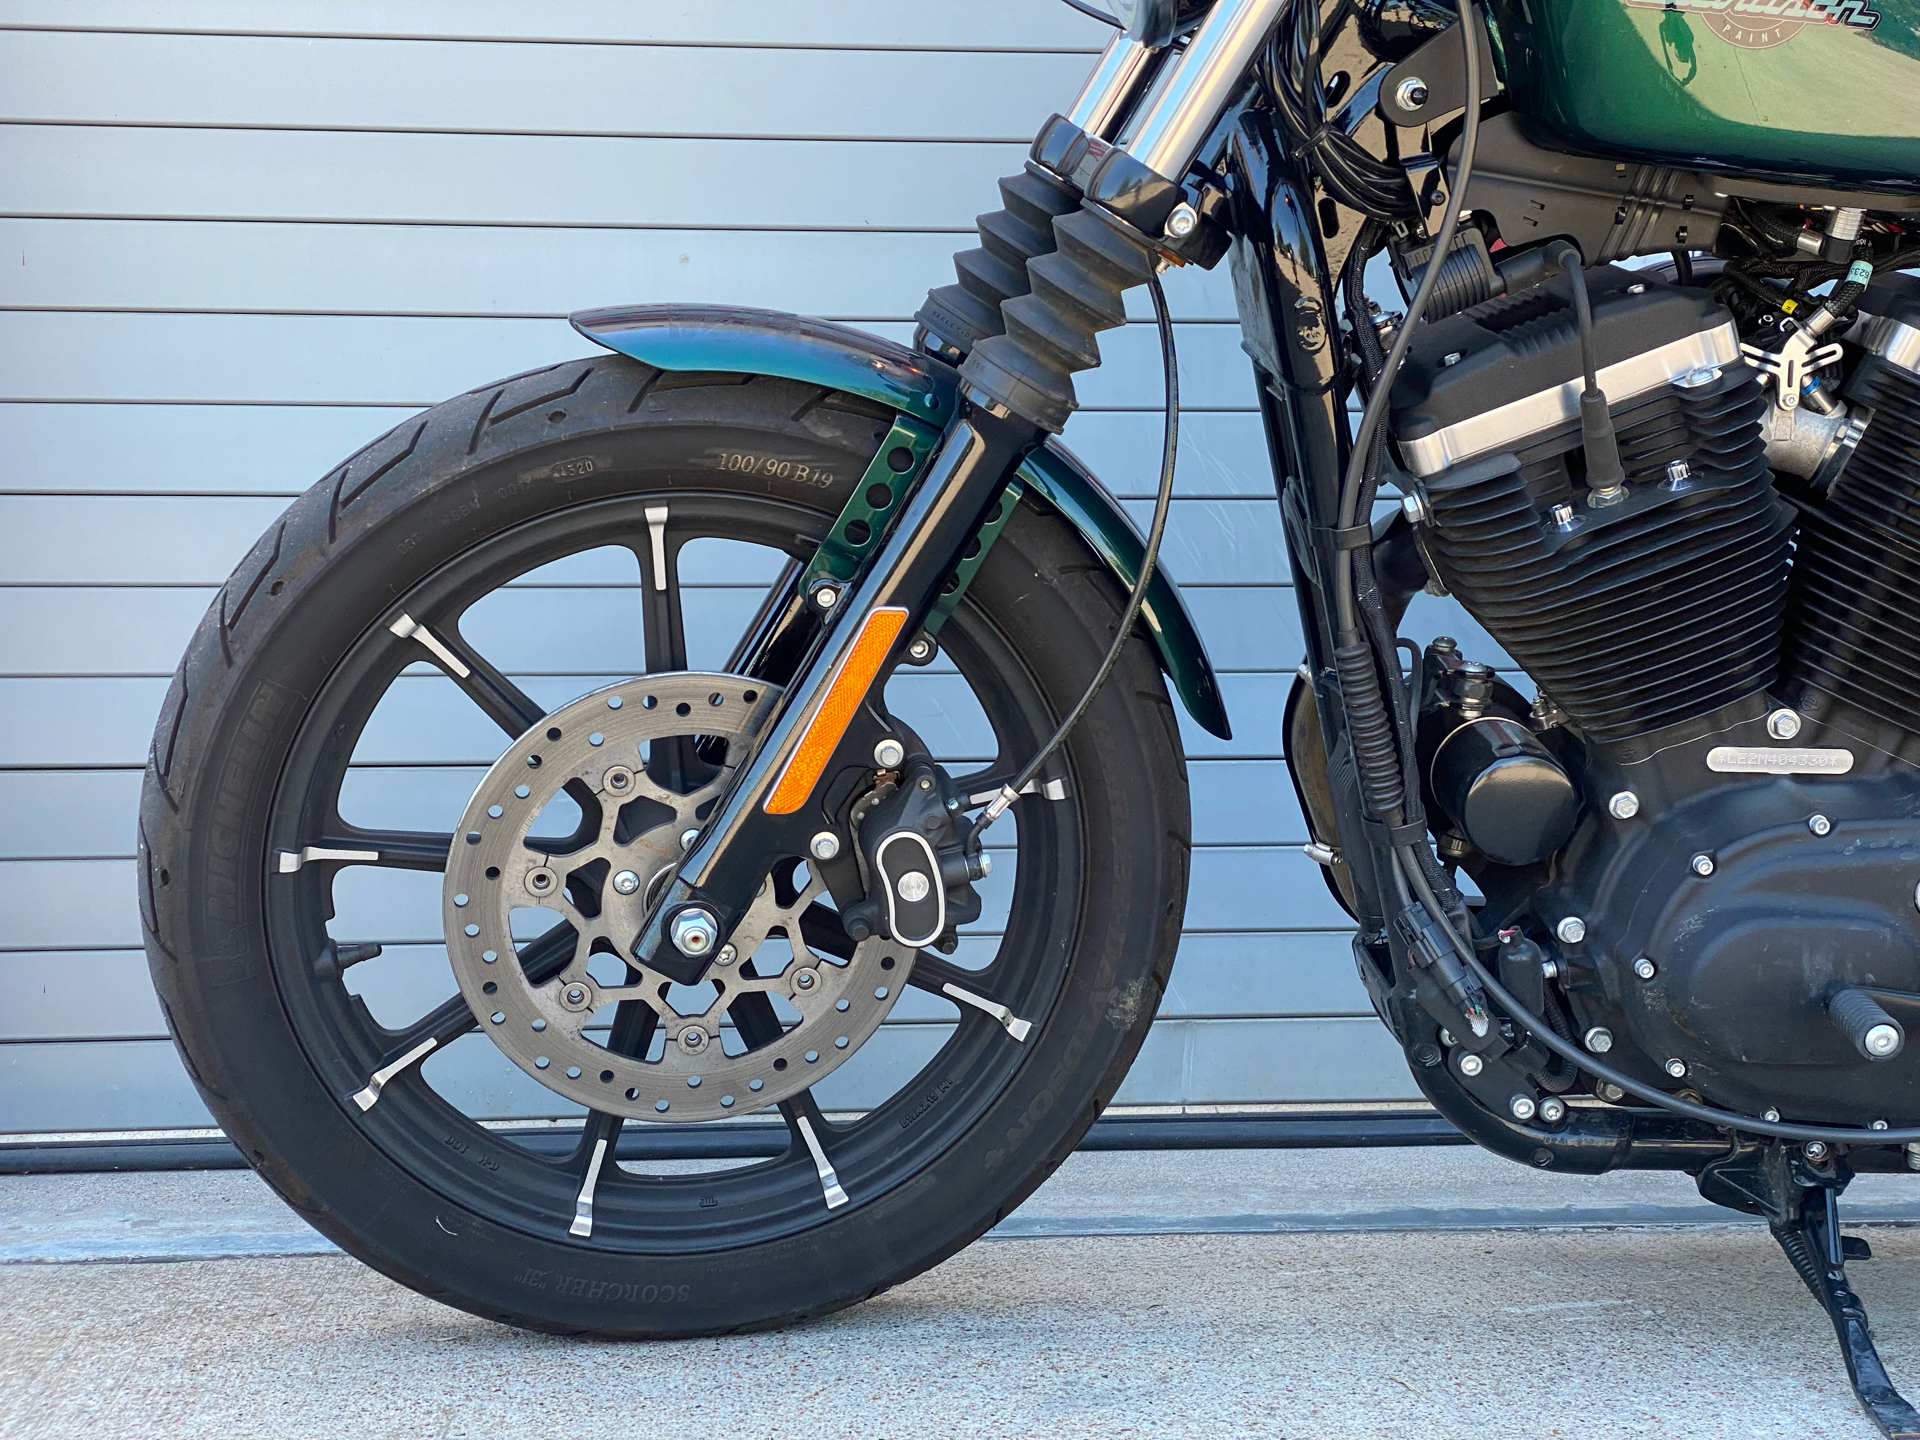 2021 Harley-Davidson Iron 883™ in Grand Prairie, Texas - Photo 12